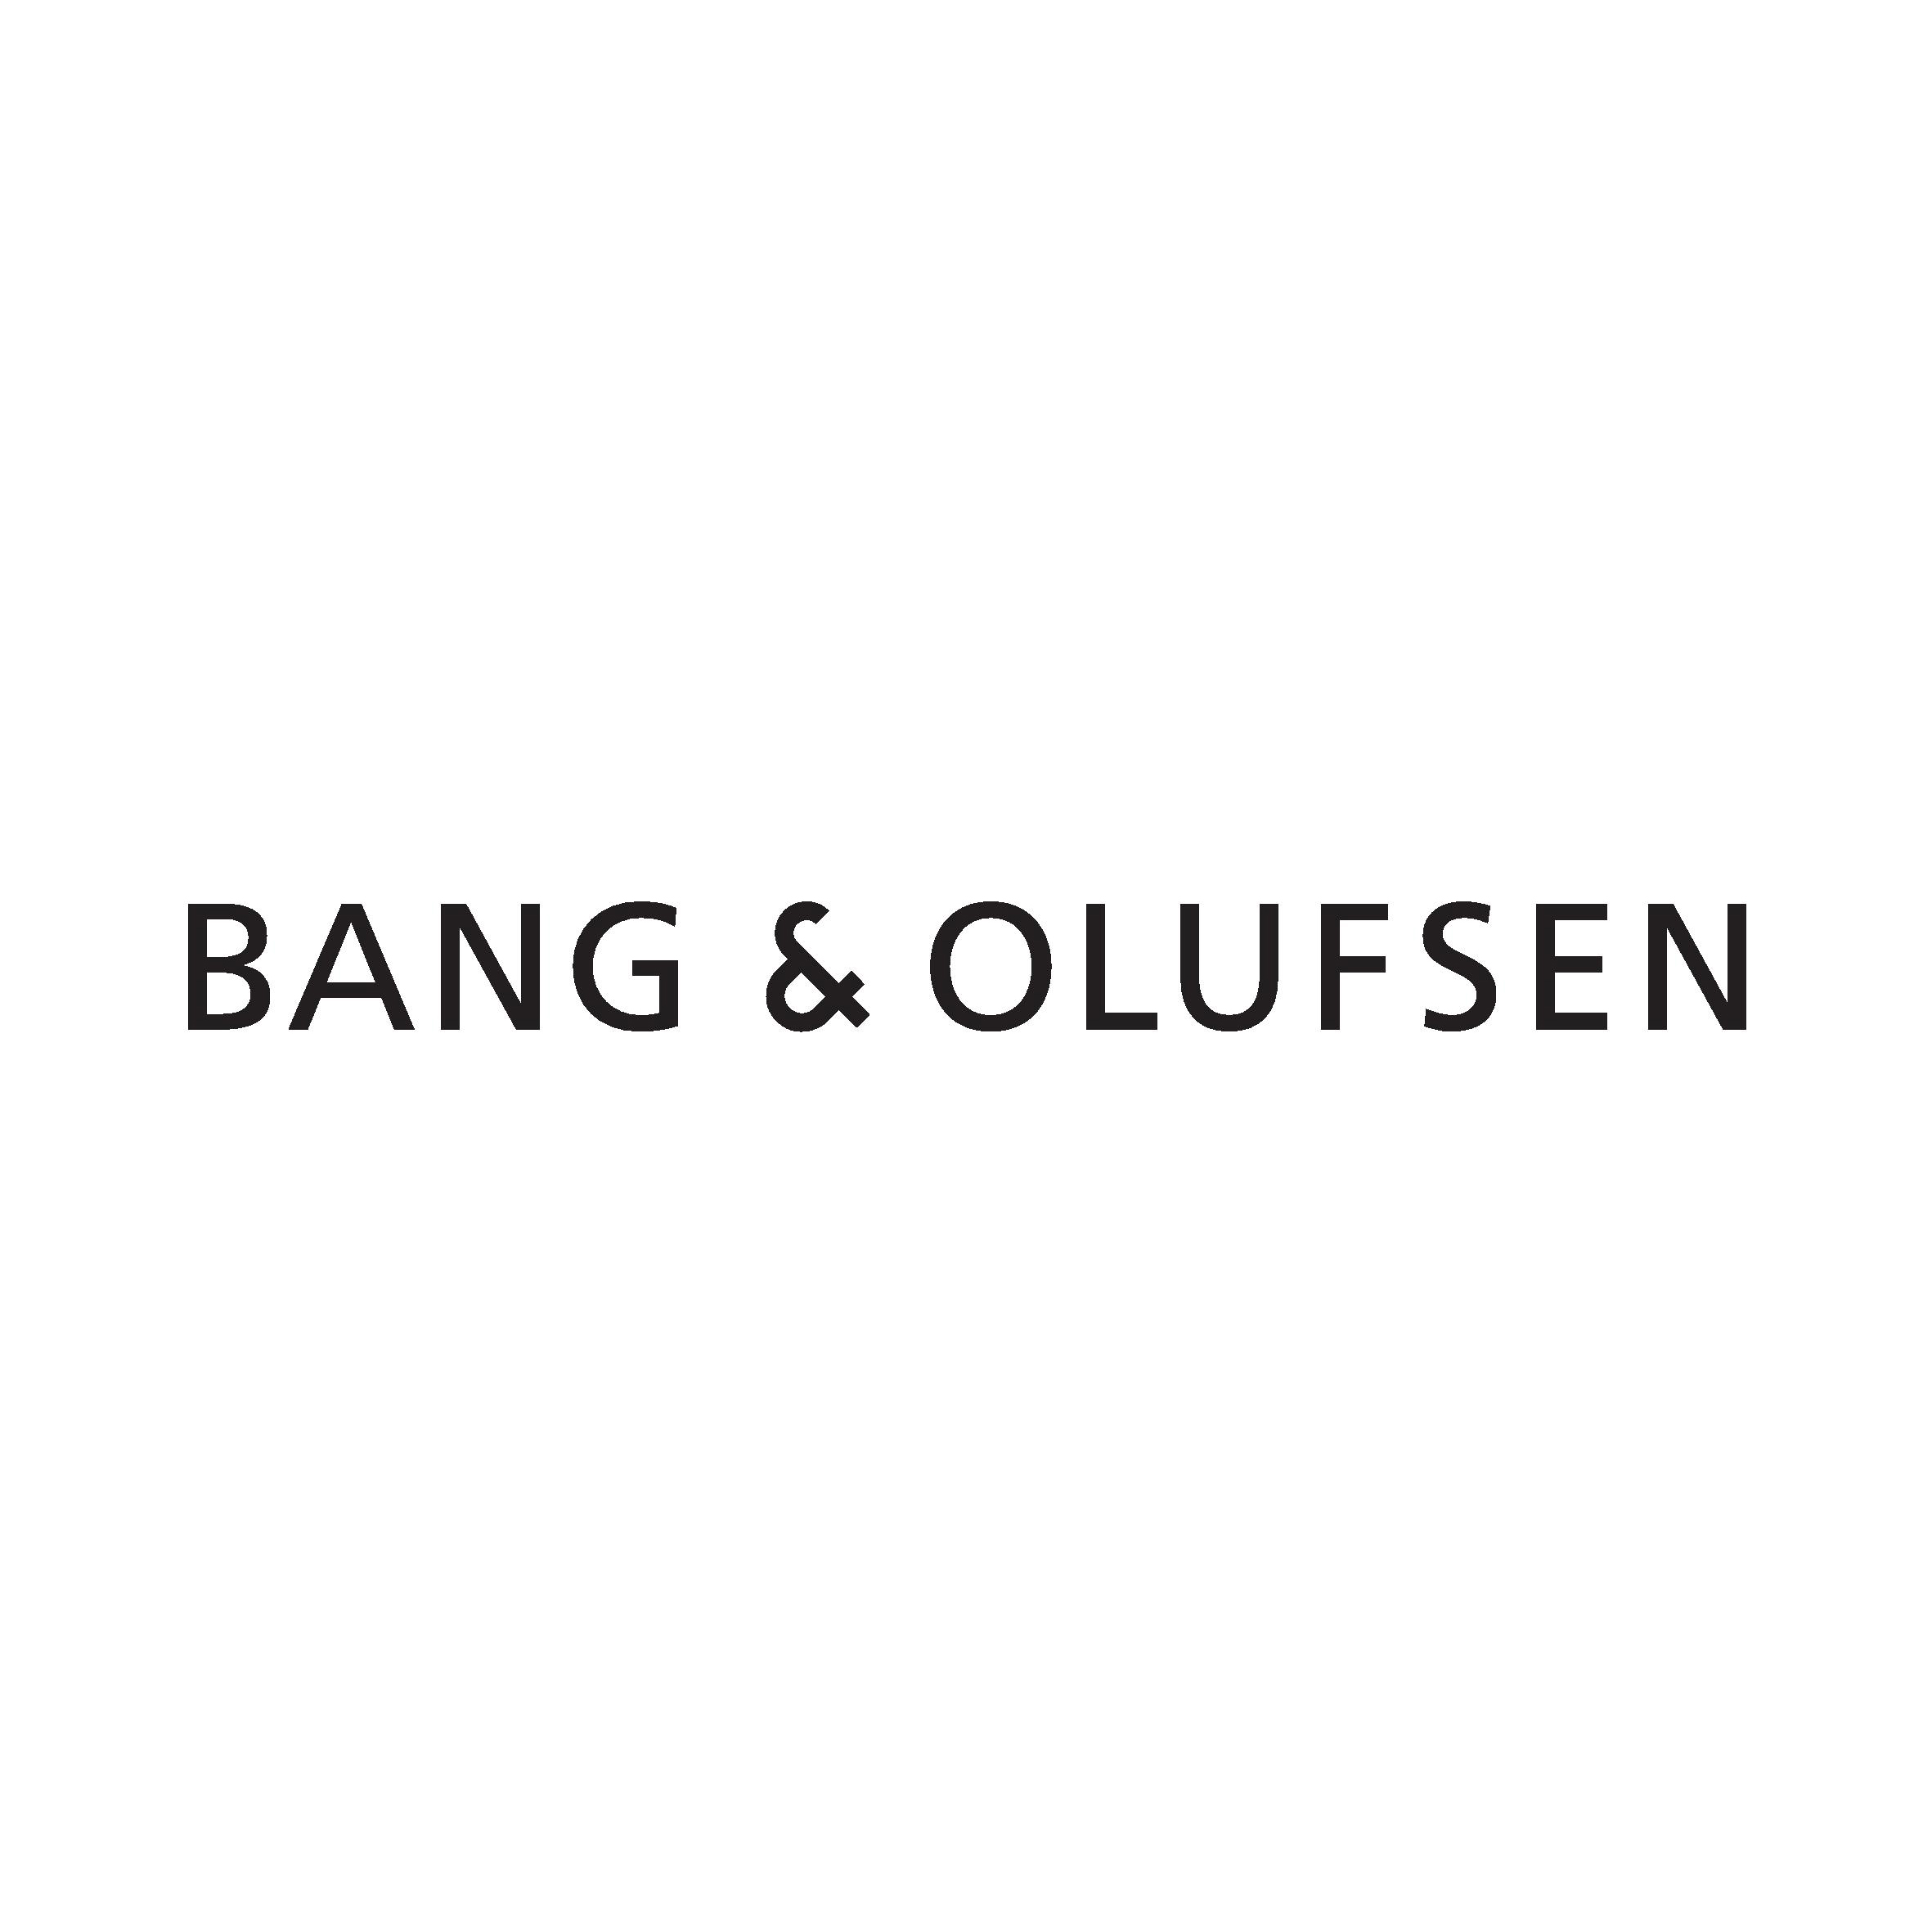 Bang & Olufsen Logo 2362x2362.jpg